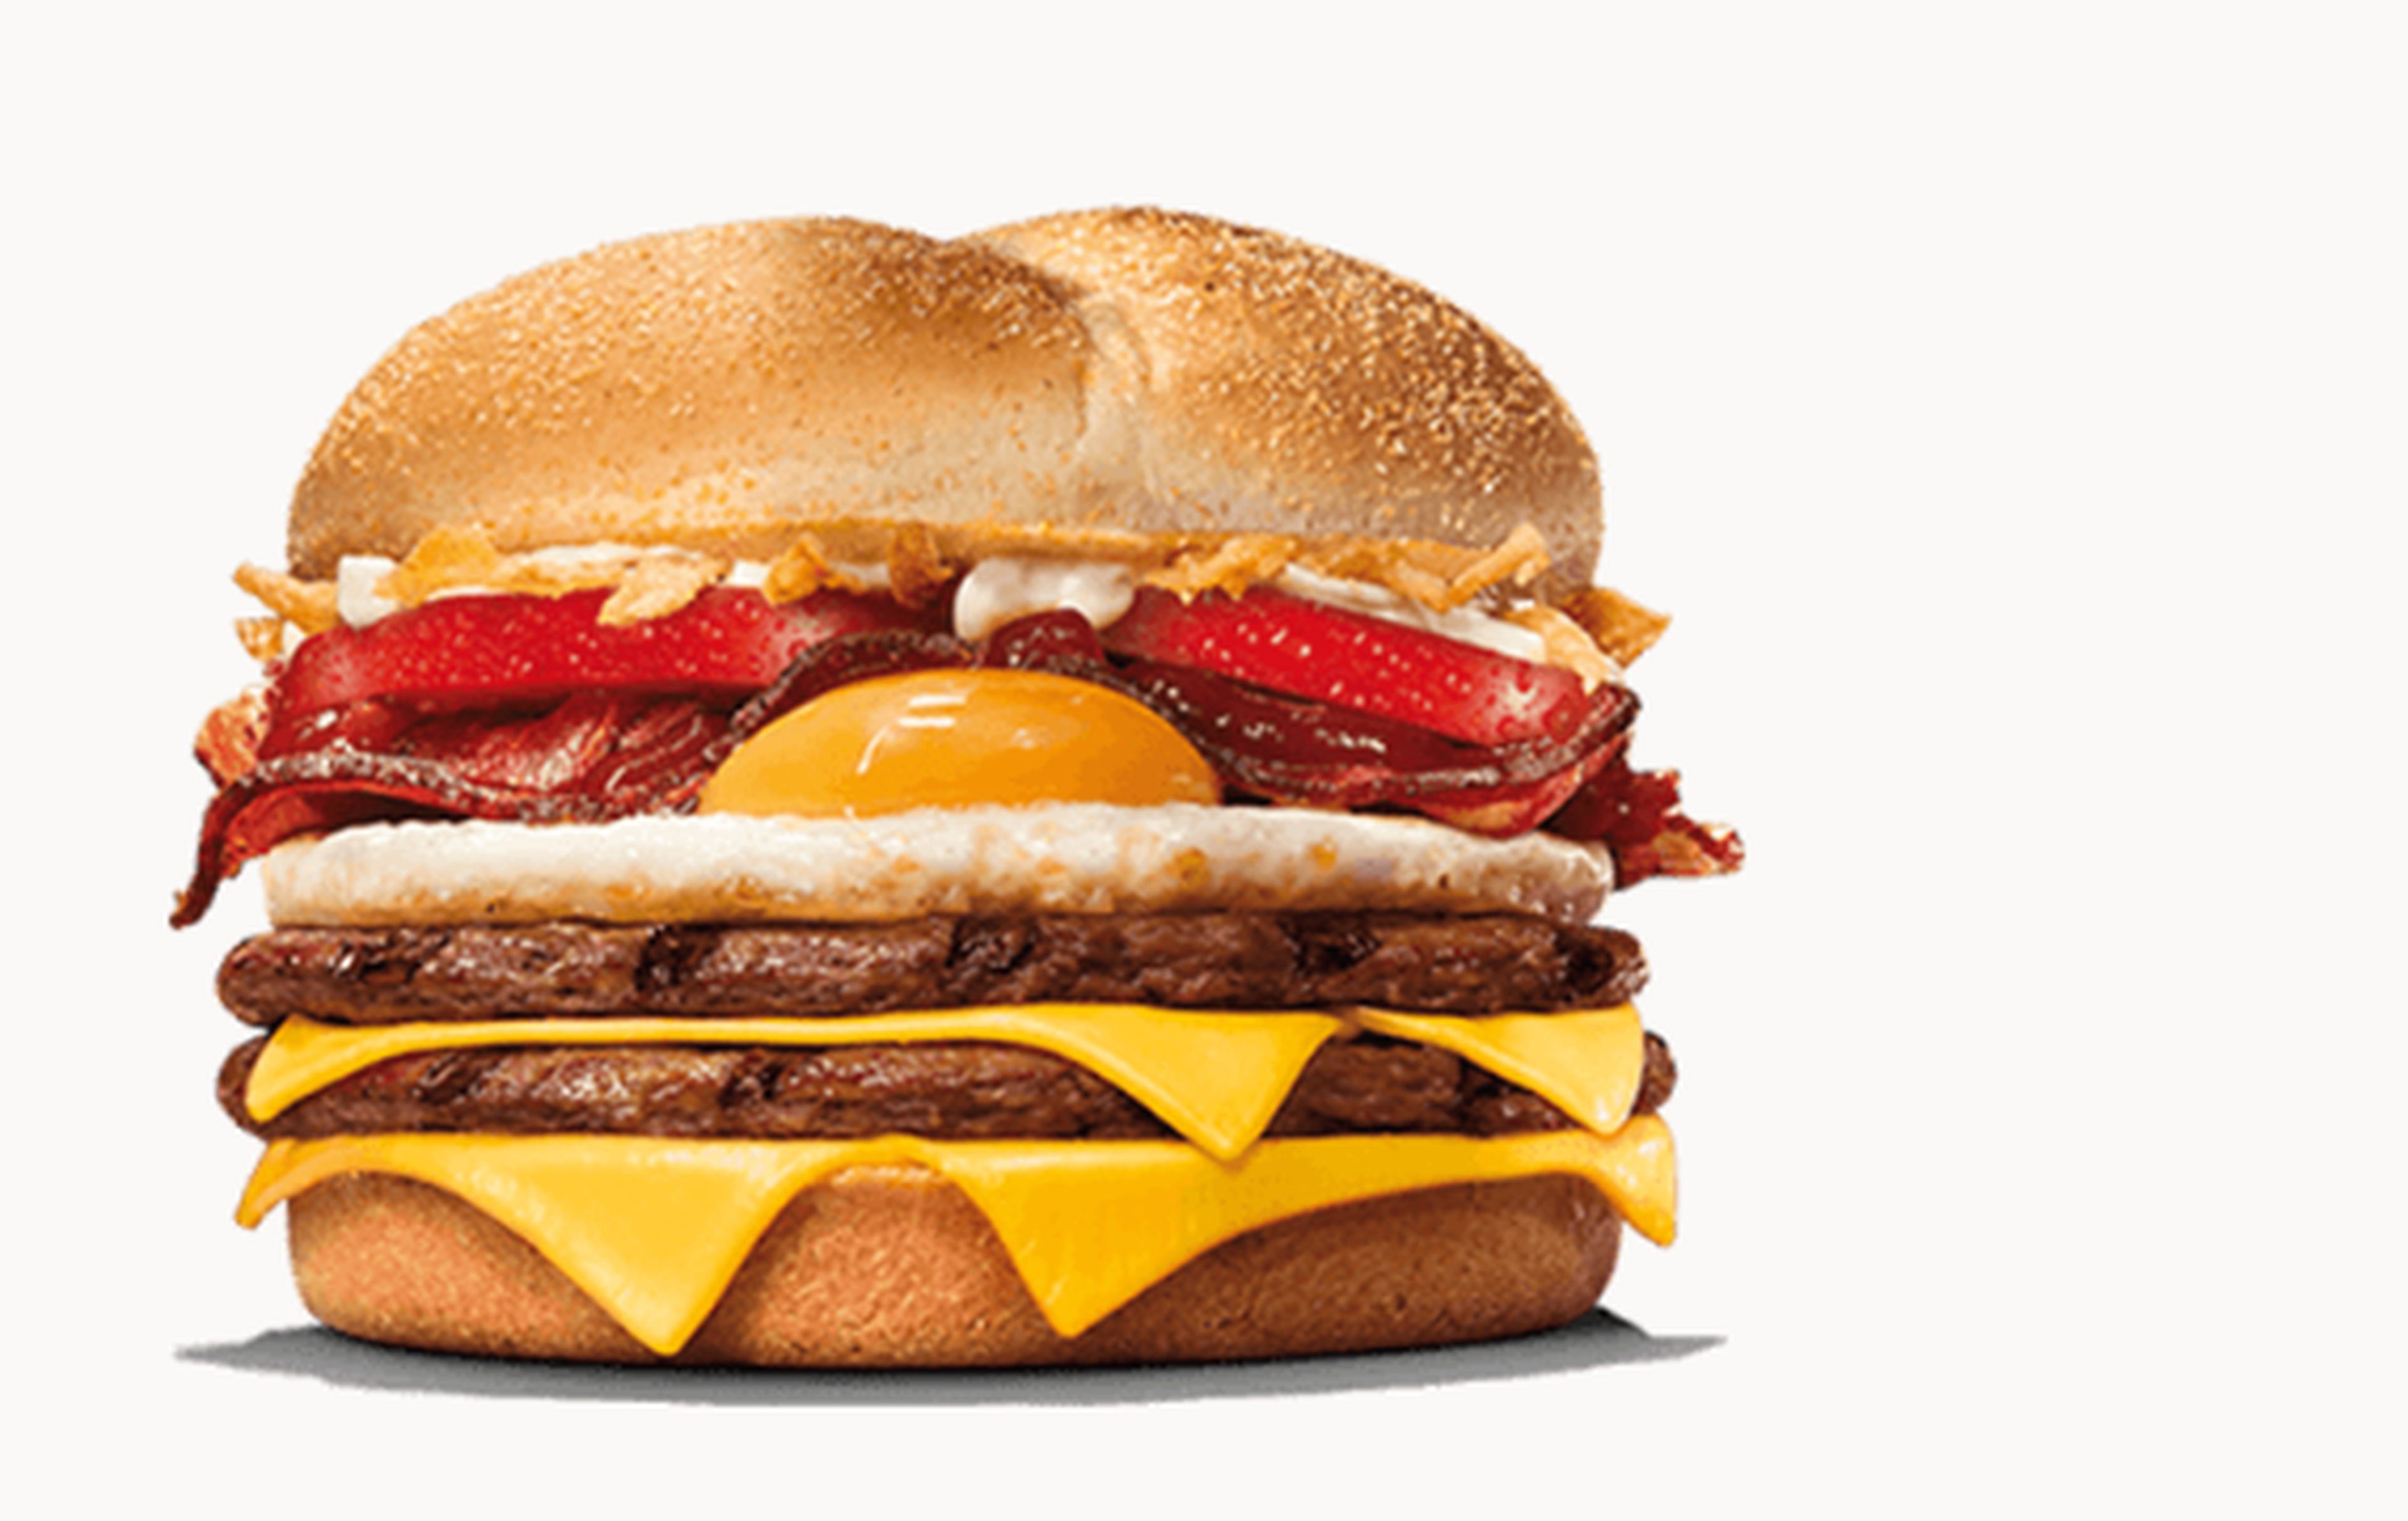 The King Huevo/ Burger King